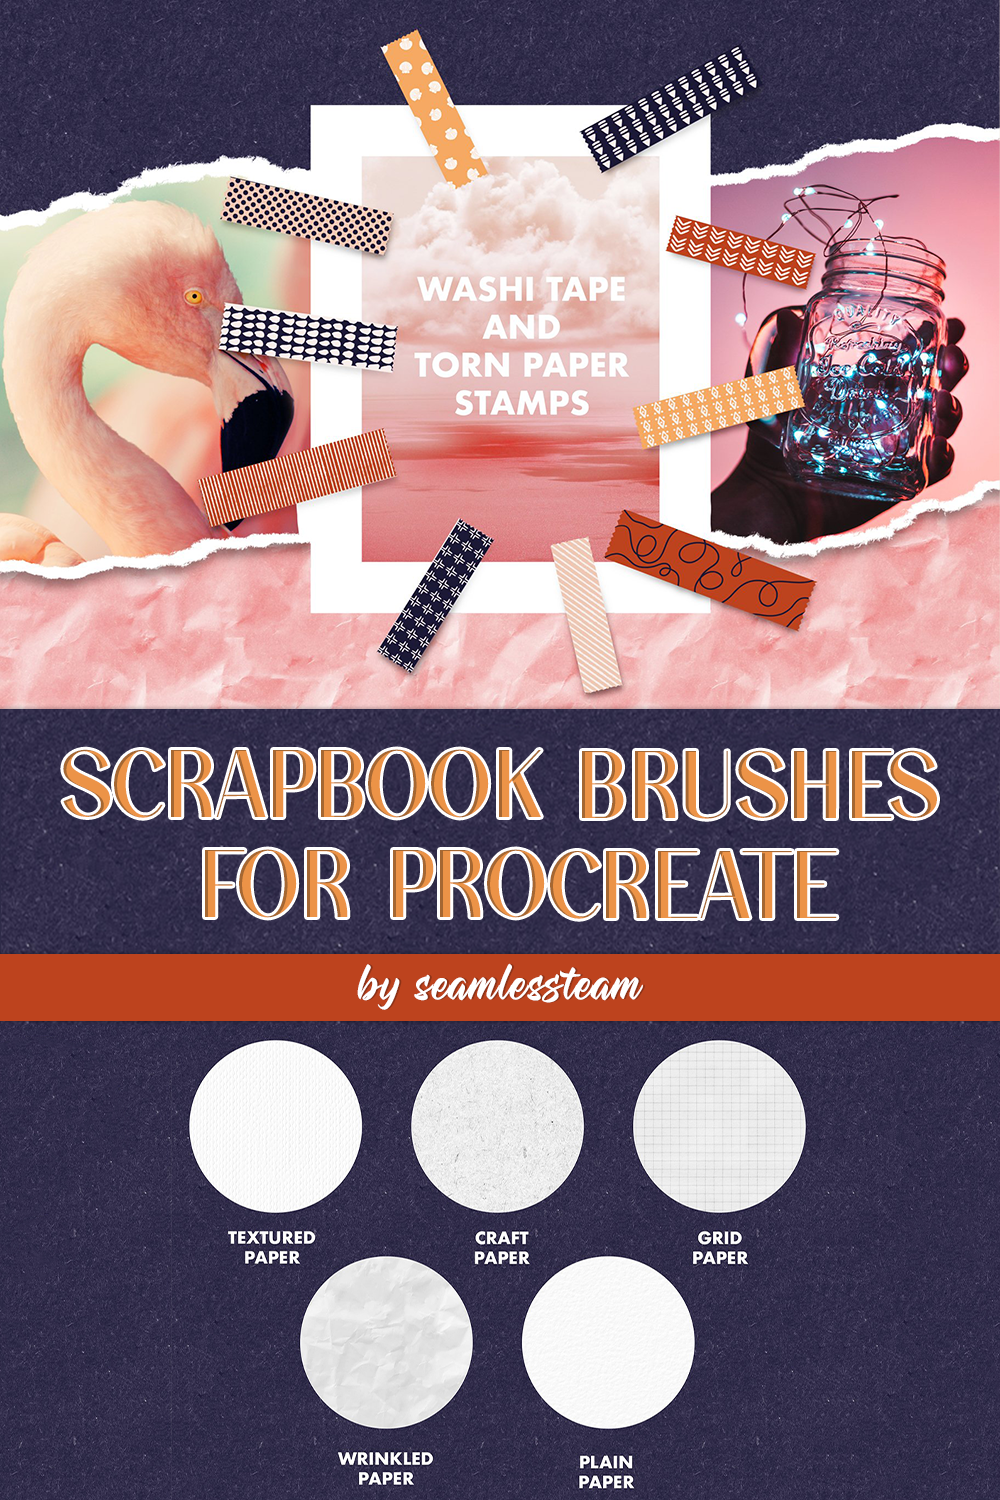 Scrapbook brushes for procreate of pinterest.